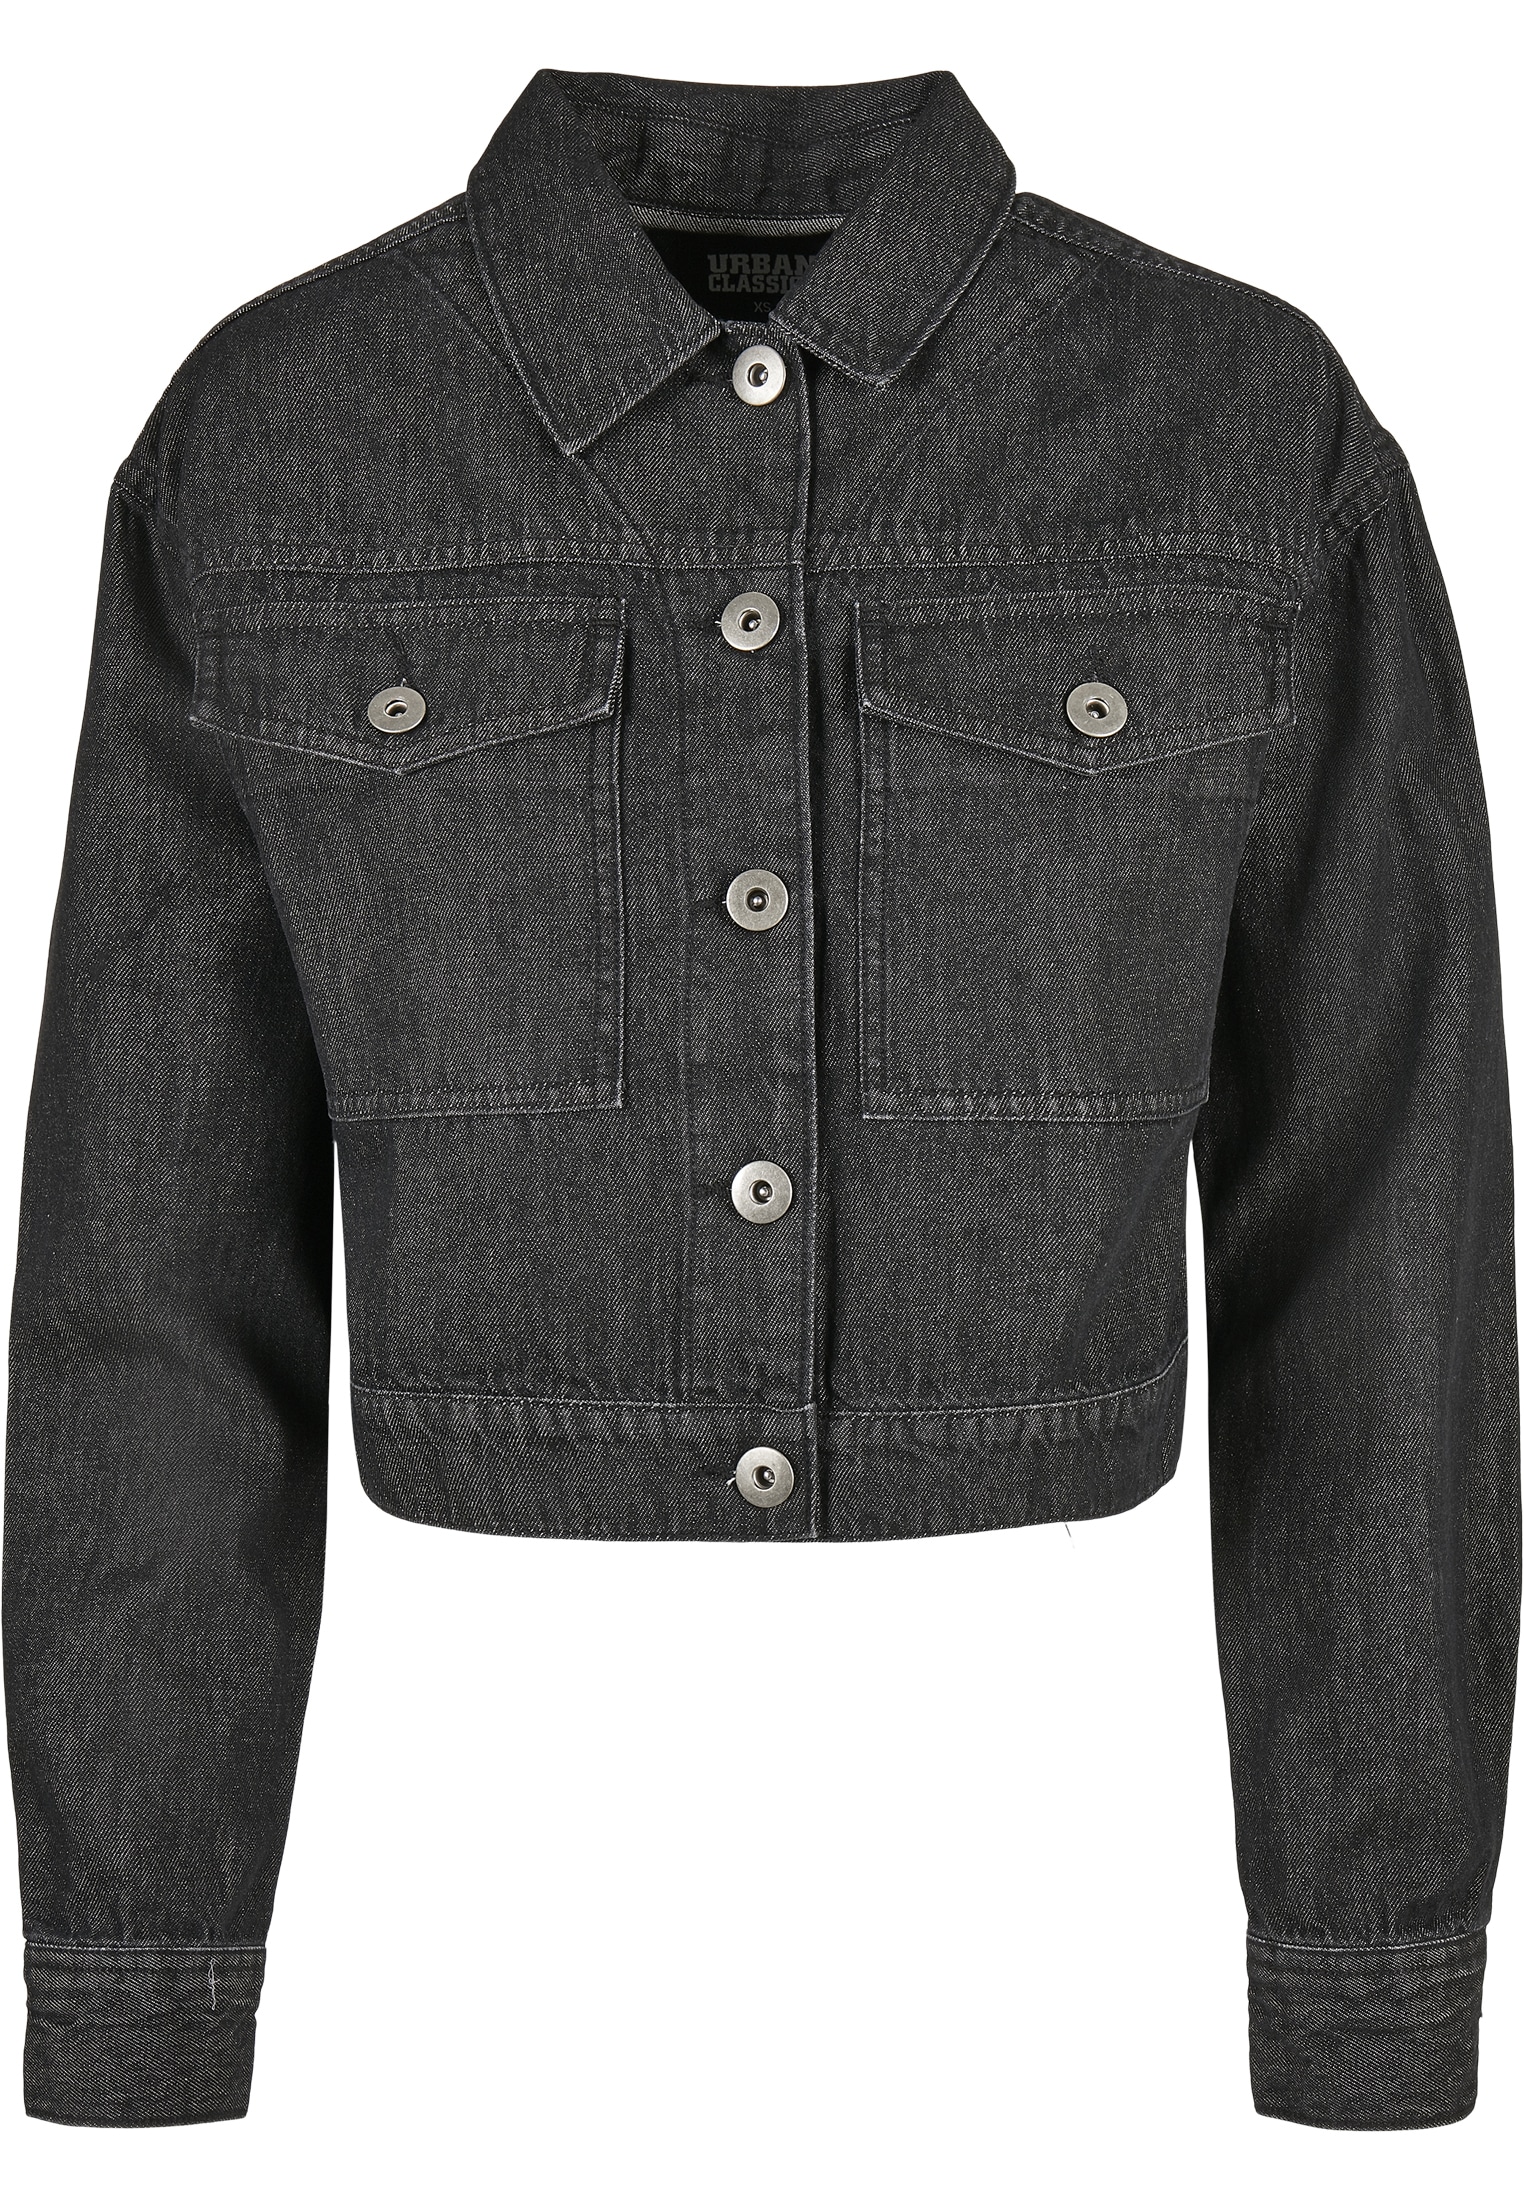 »Damen kaufen URBAN Denim Outdoorjacke Short ohne Jacket«, St.), CLASSICS Kapuze (1 Ladies Oversized